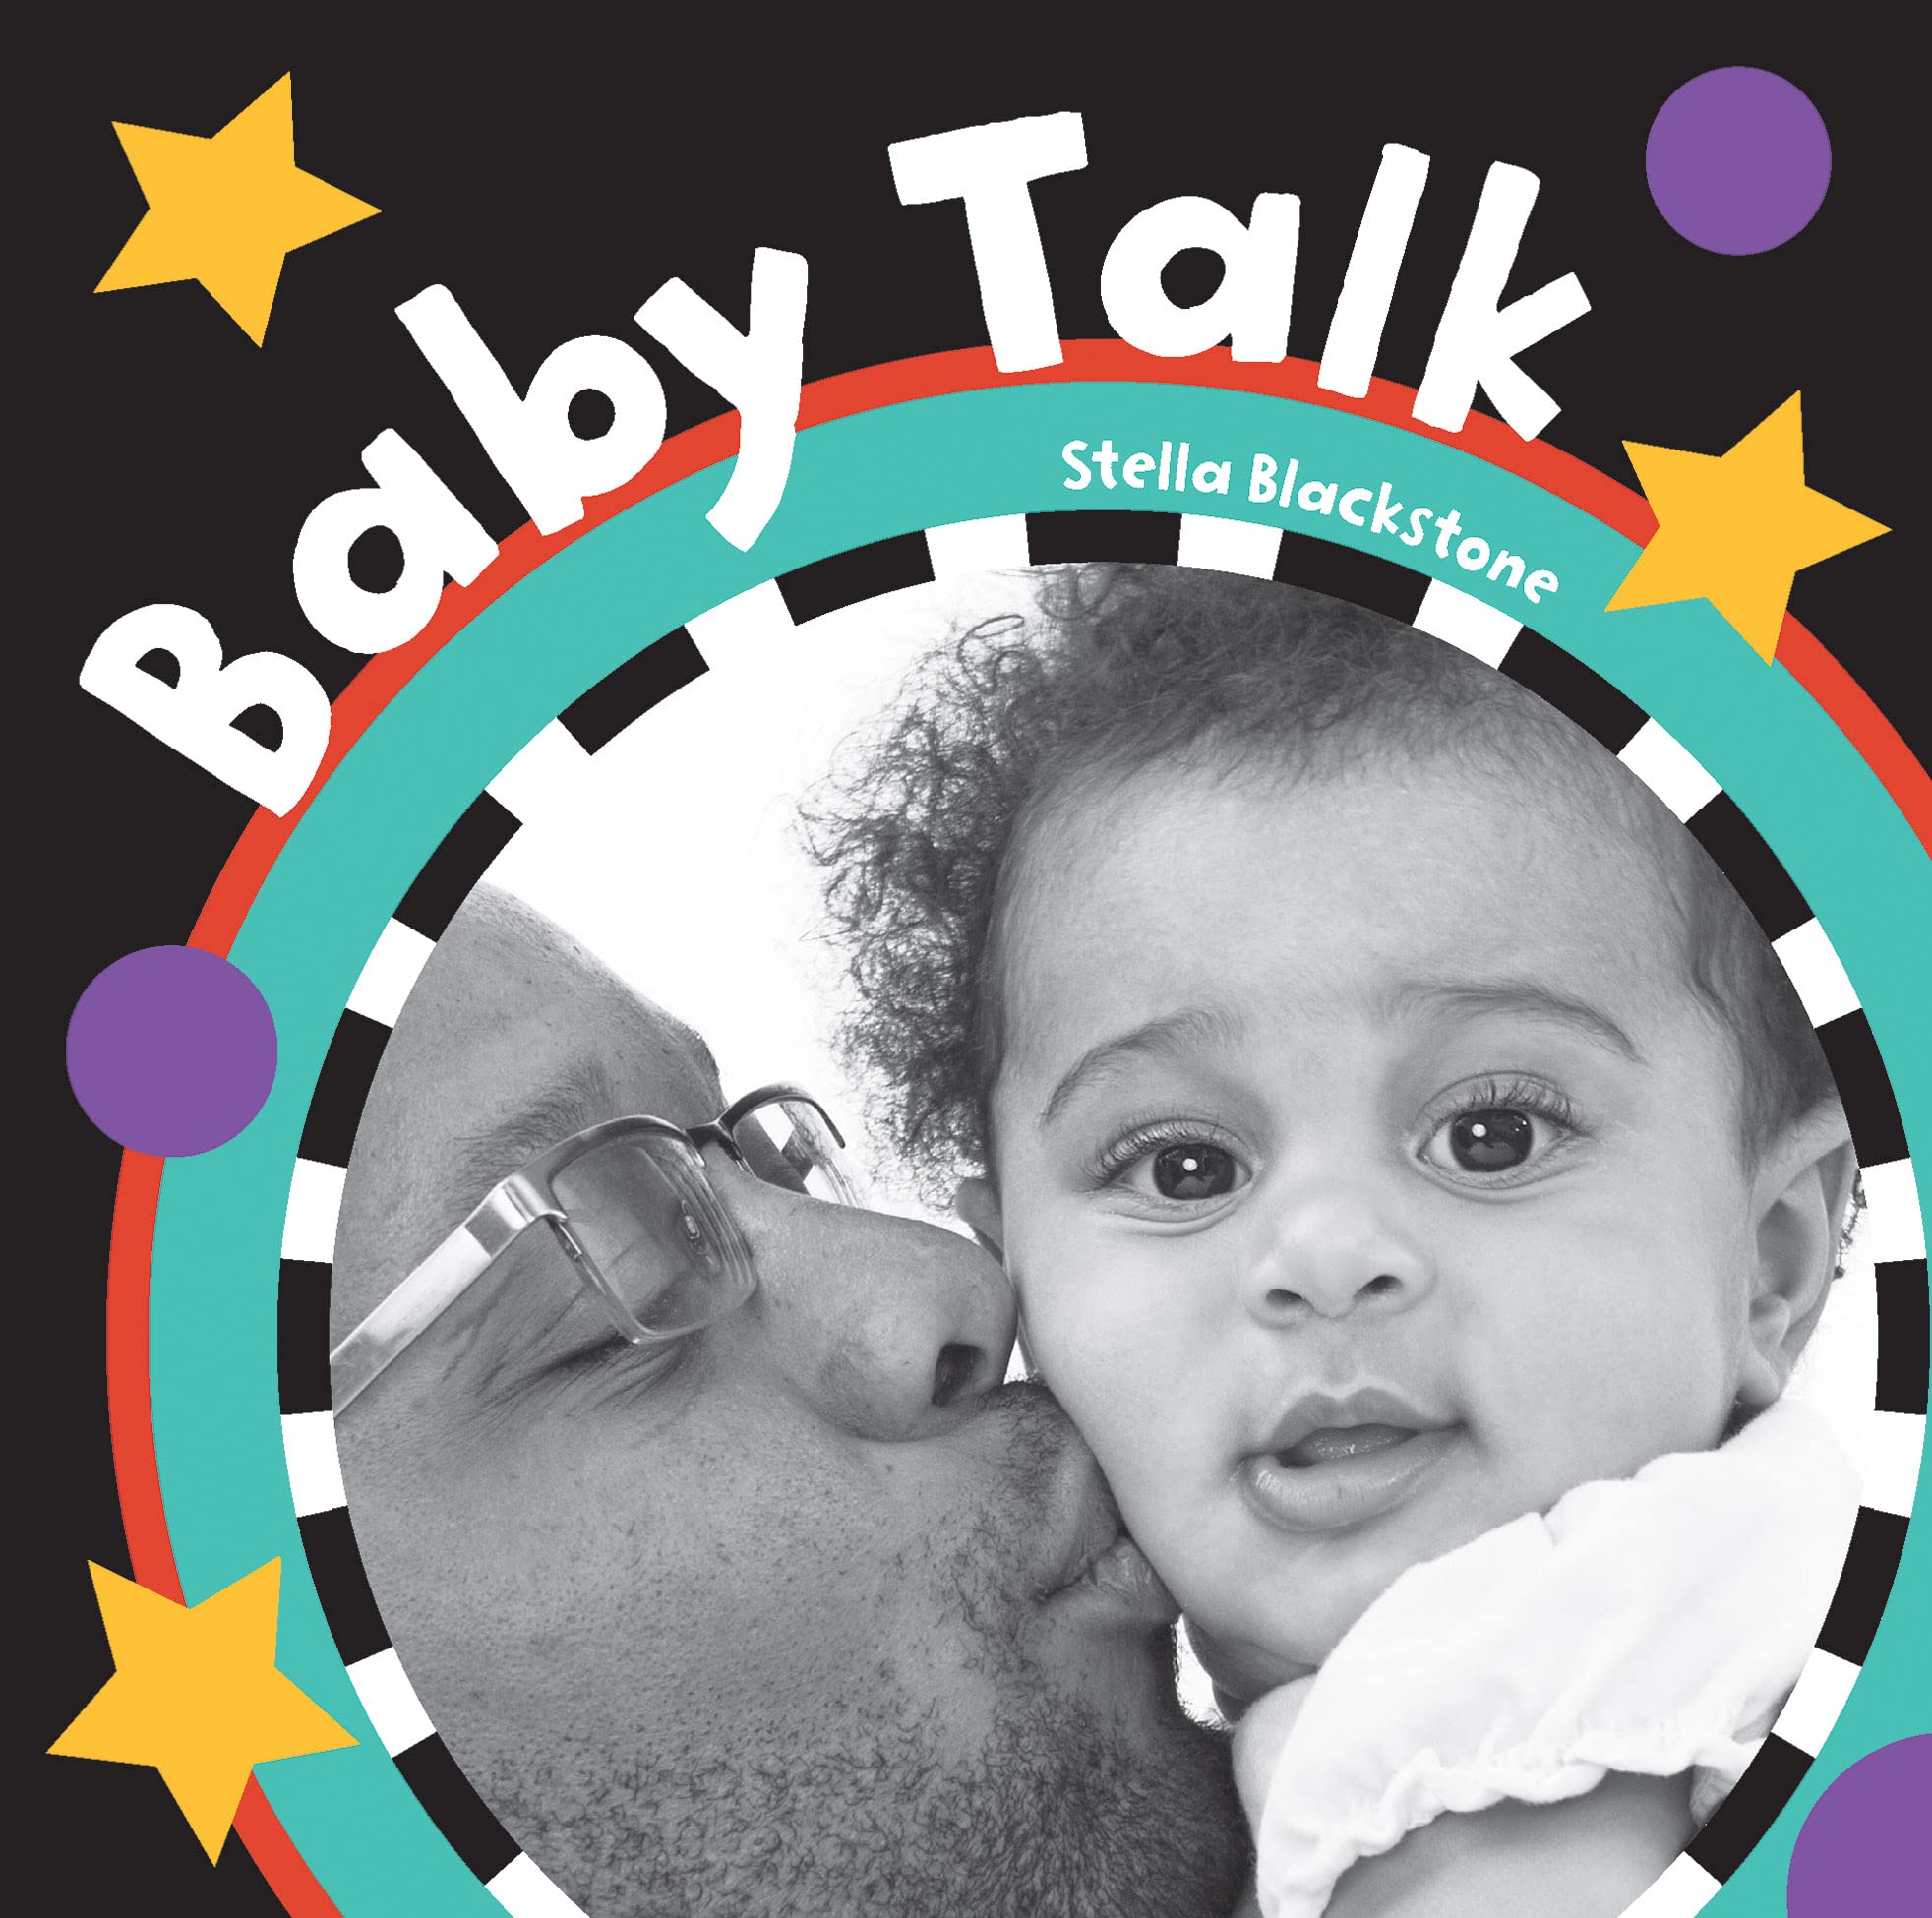 IMG : Baby talk